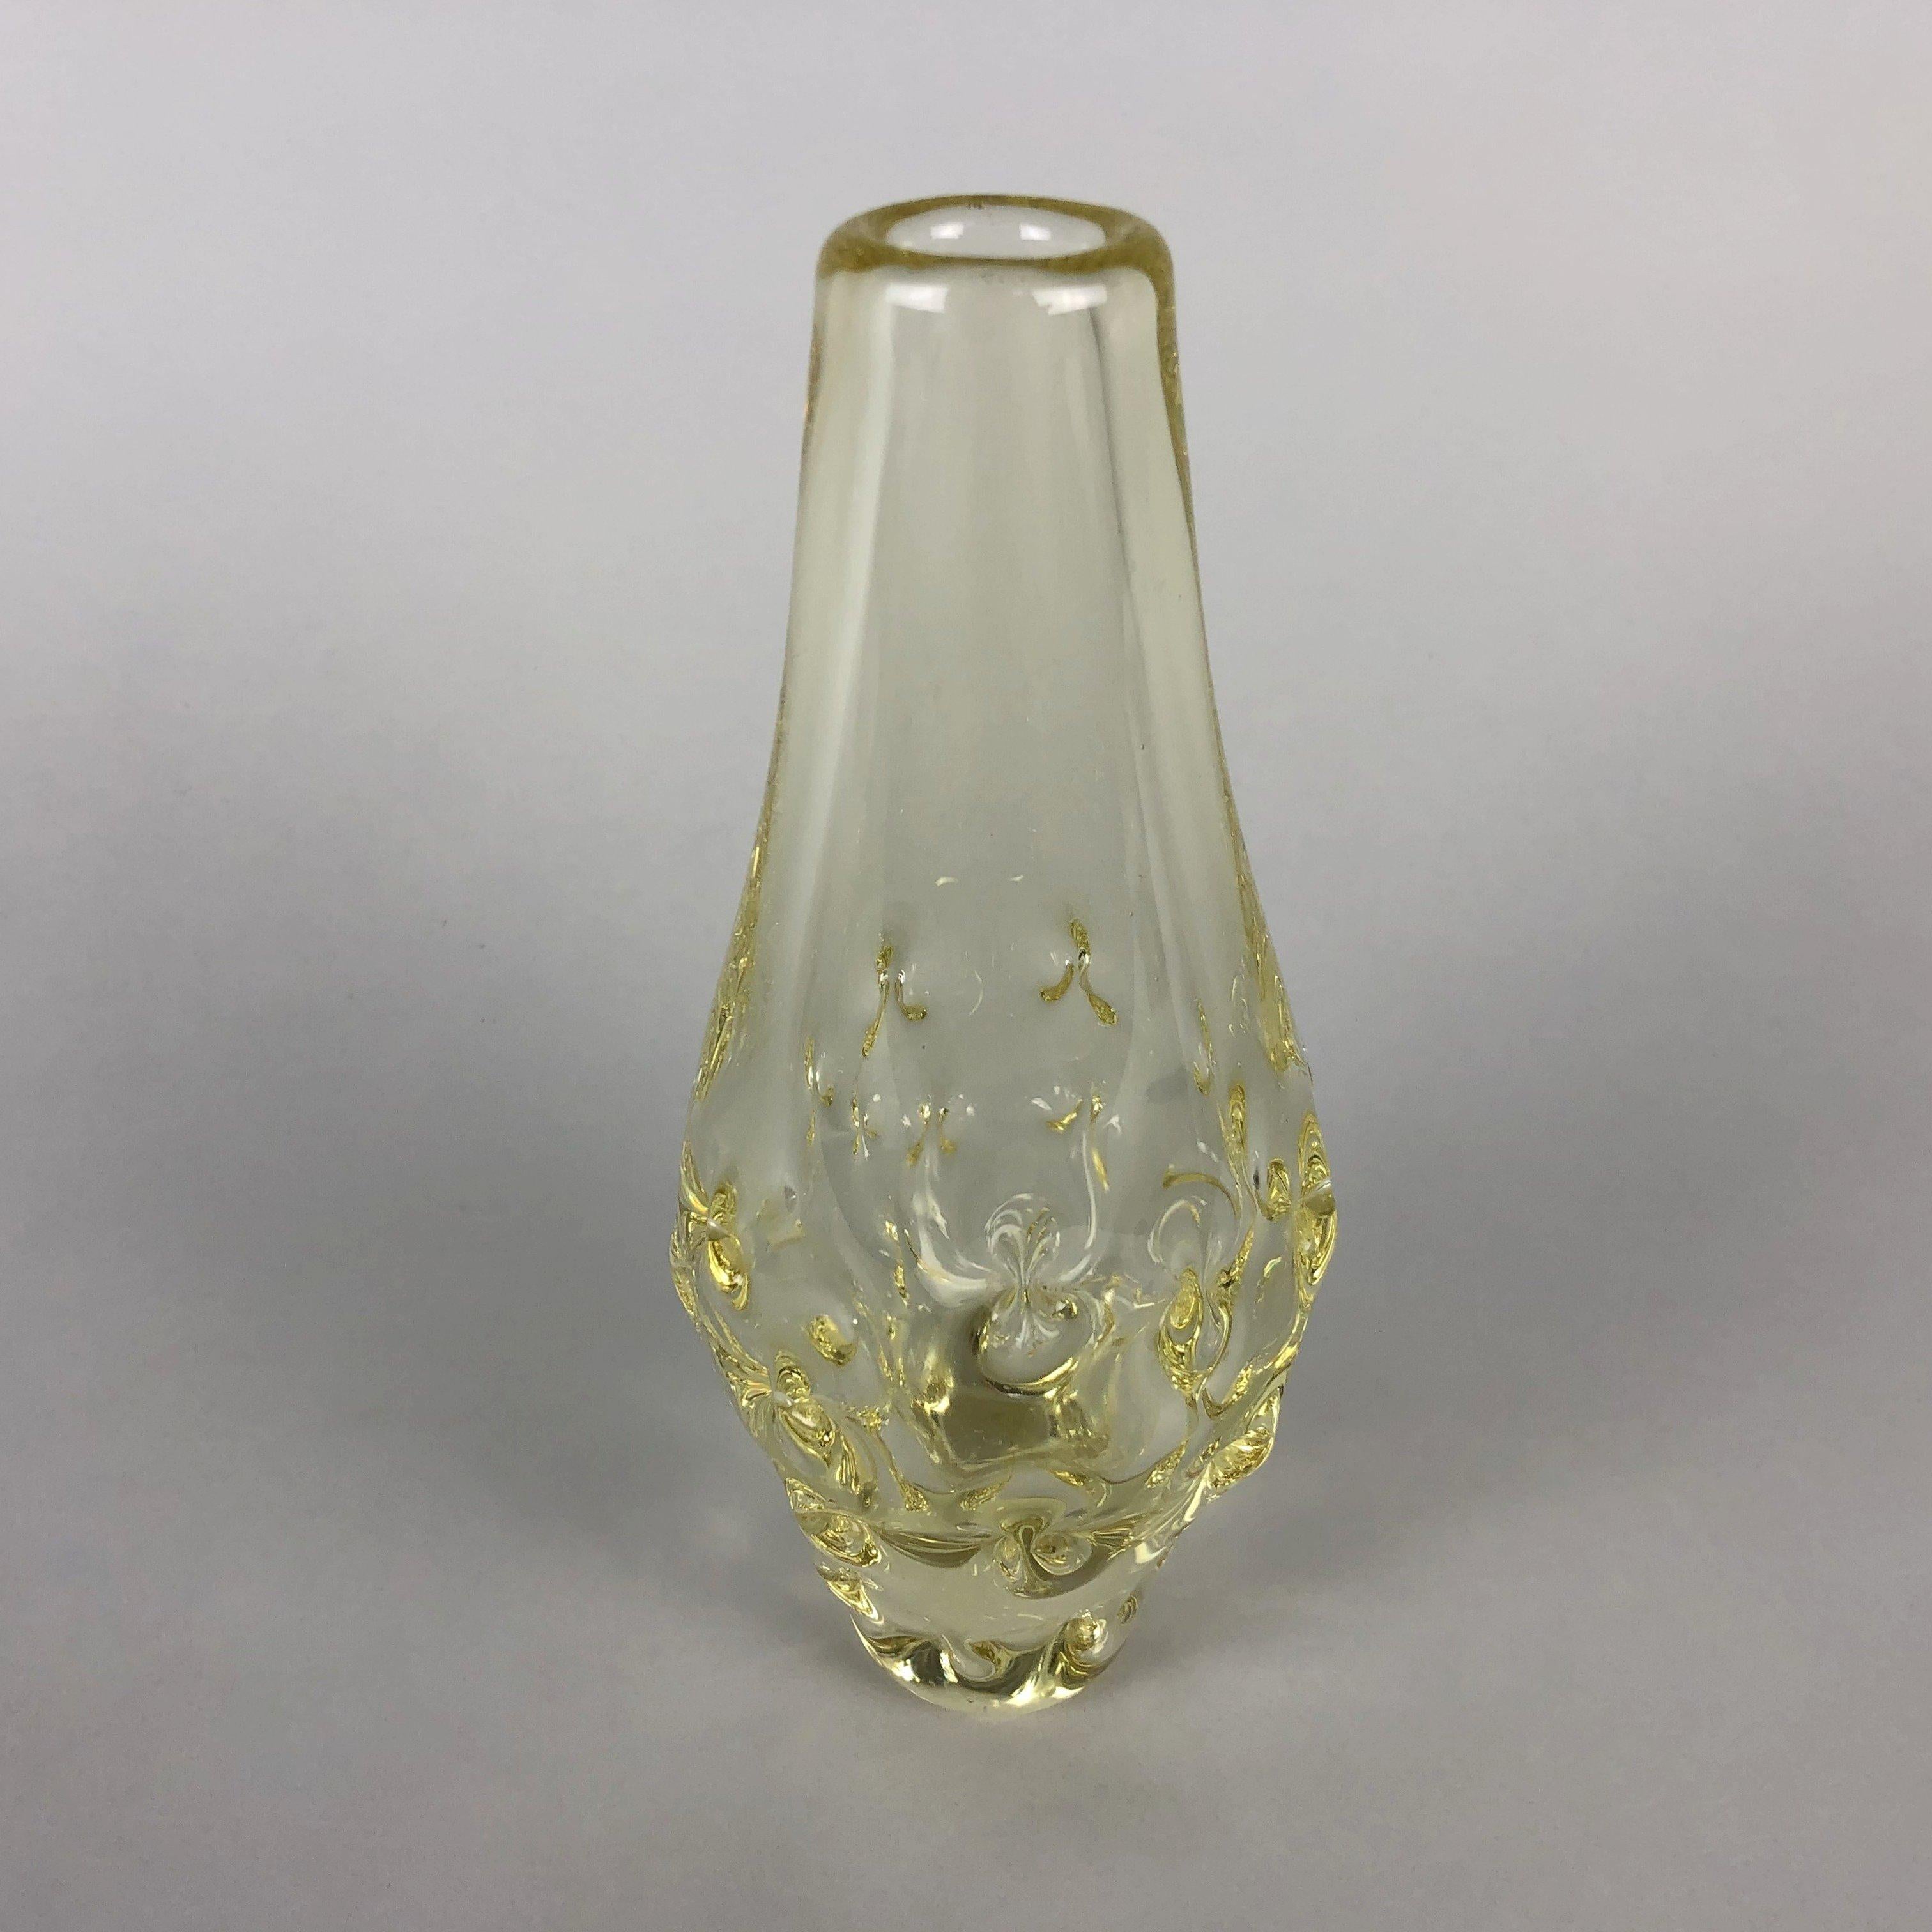 Yellow/citrine glass vase, with 